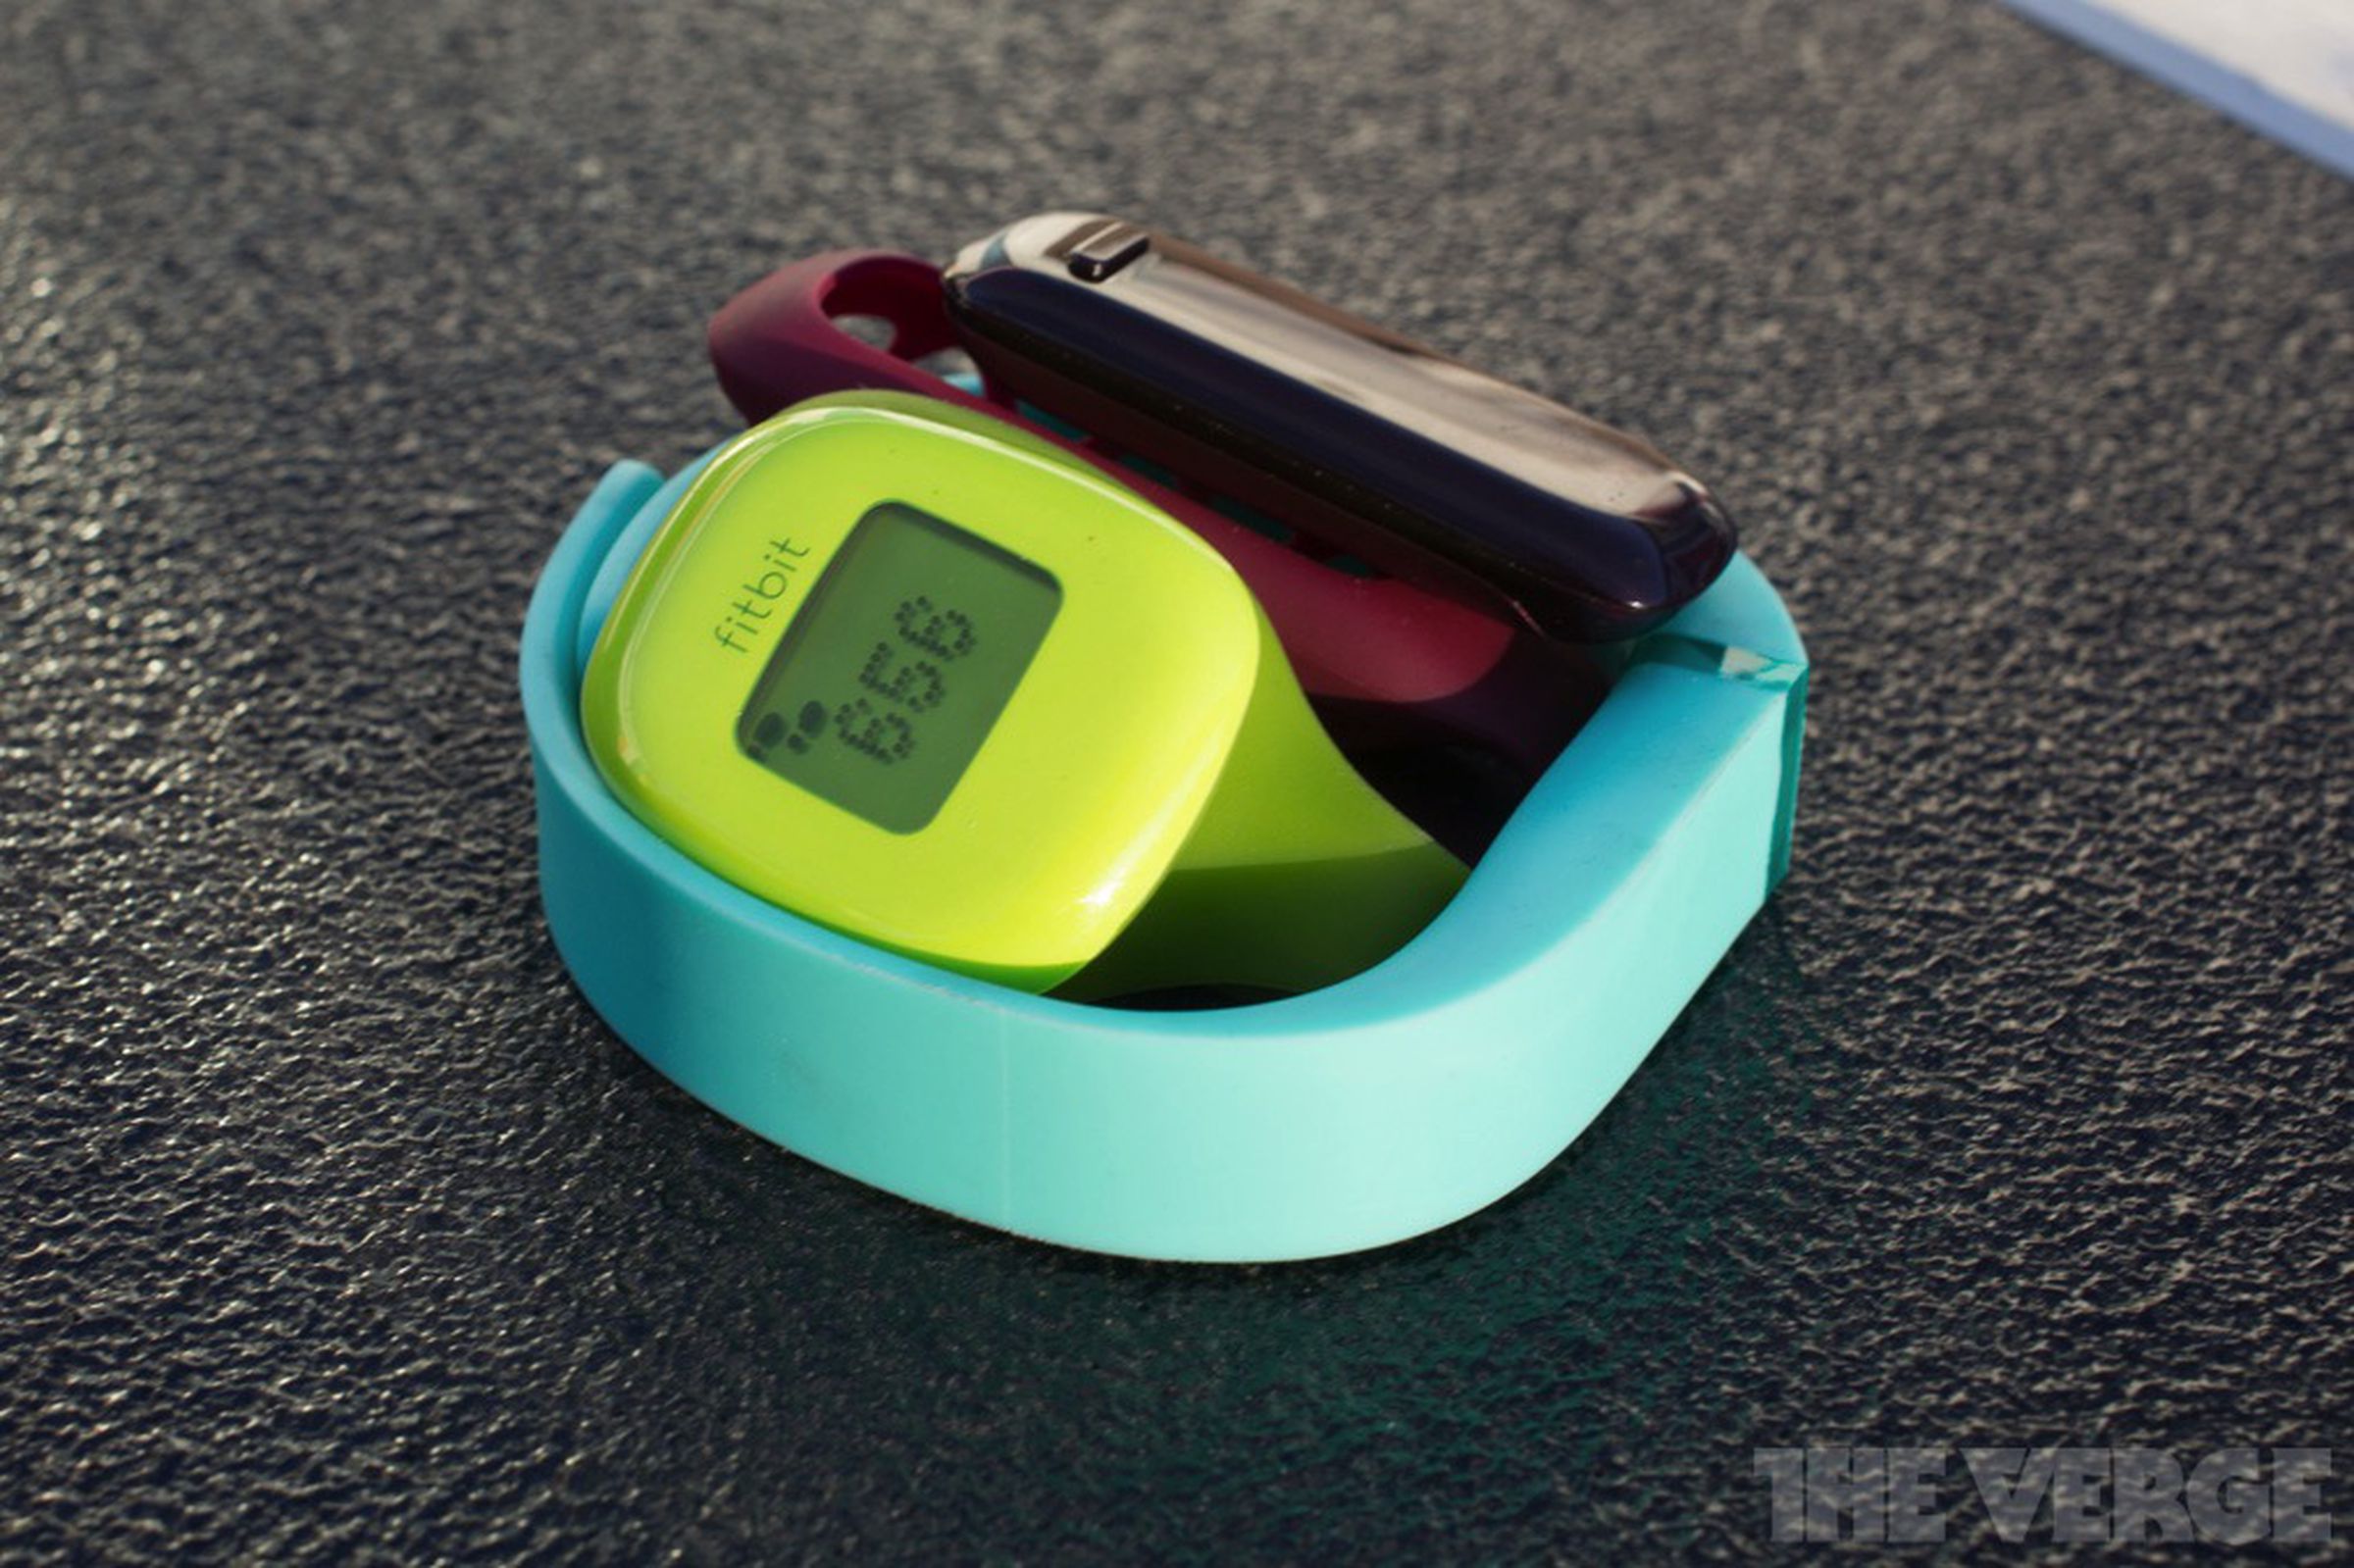 Fitbit Flex wristband fitness tracker hands-on photos